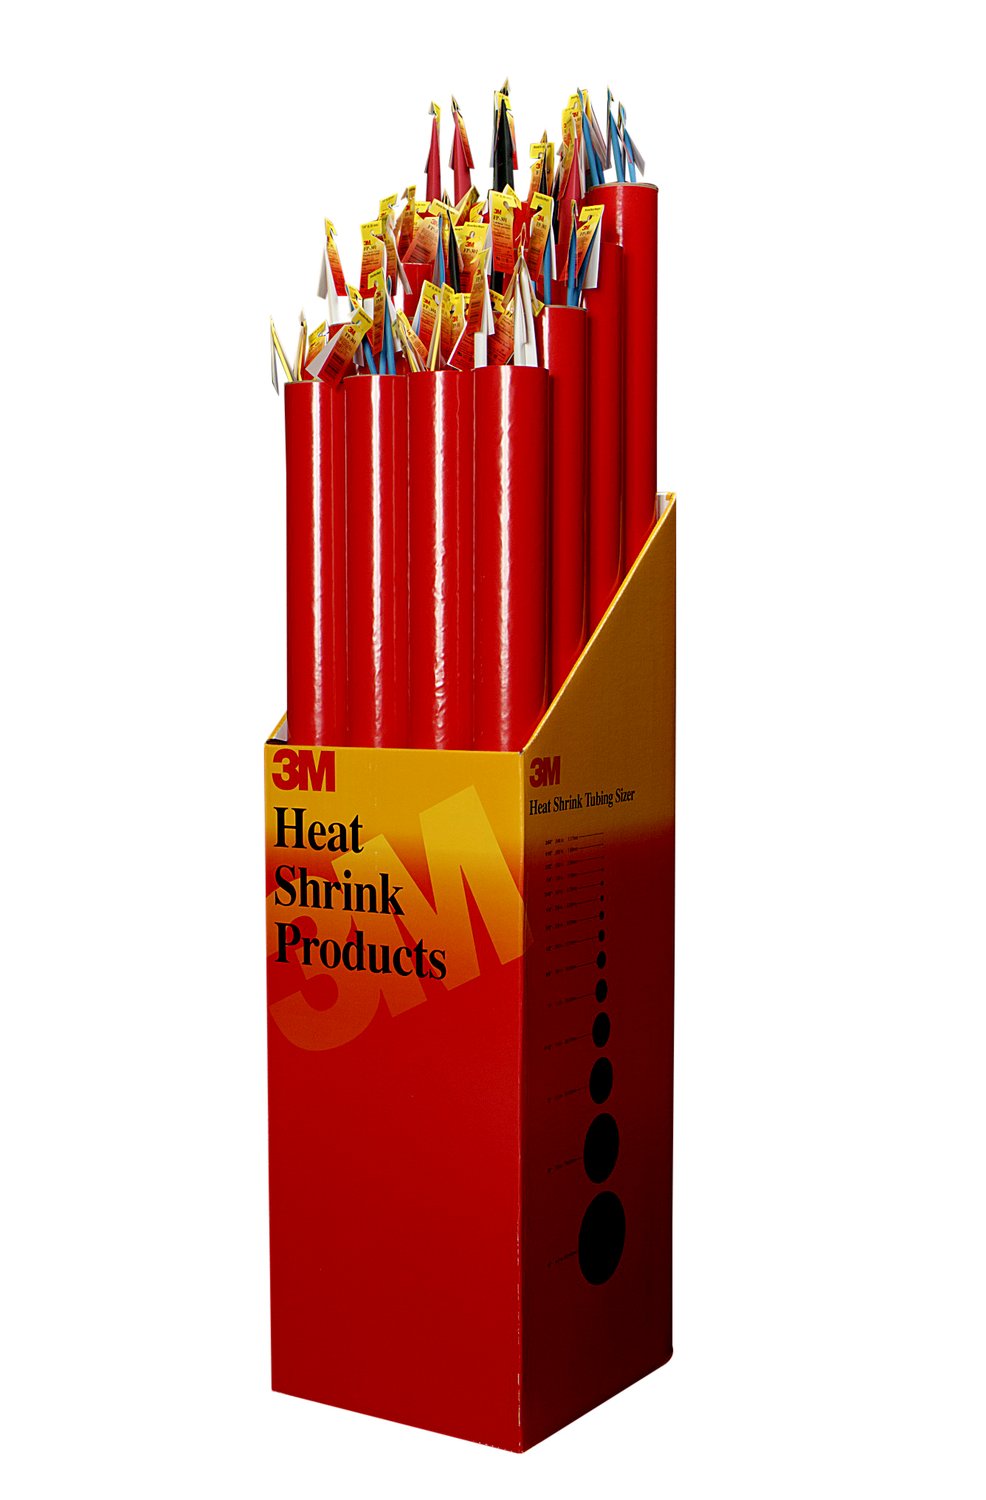 7100034433 - 3M Modified Polyvinylidene Flouride Heat Shrink Tubing
MFP-1/4-48-Clear-Bulk: 4 ft length sticks, 125 per box, 125/Case